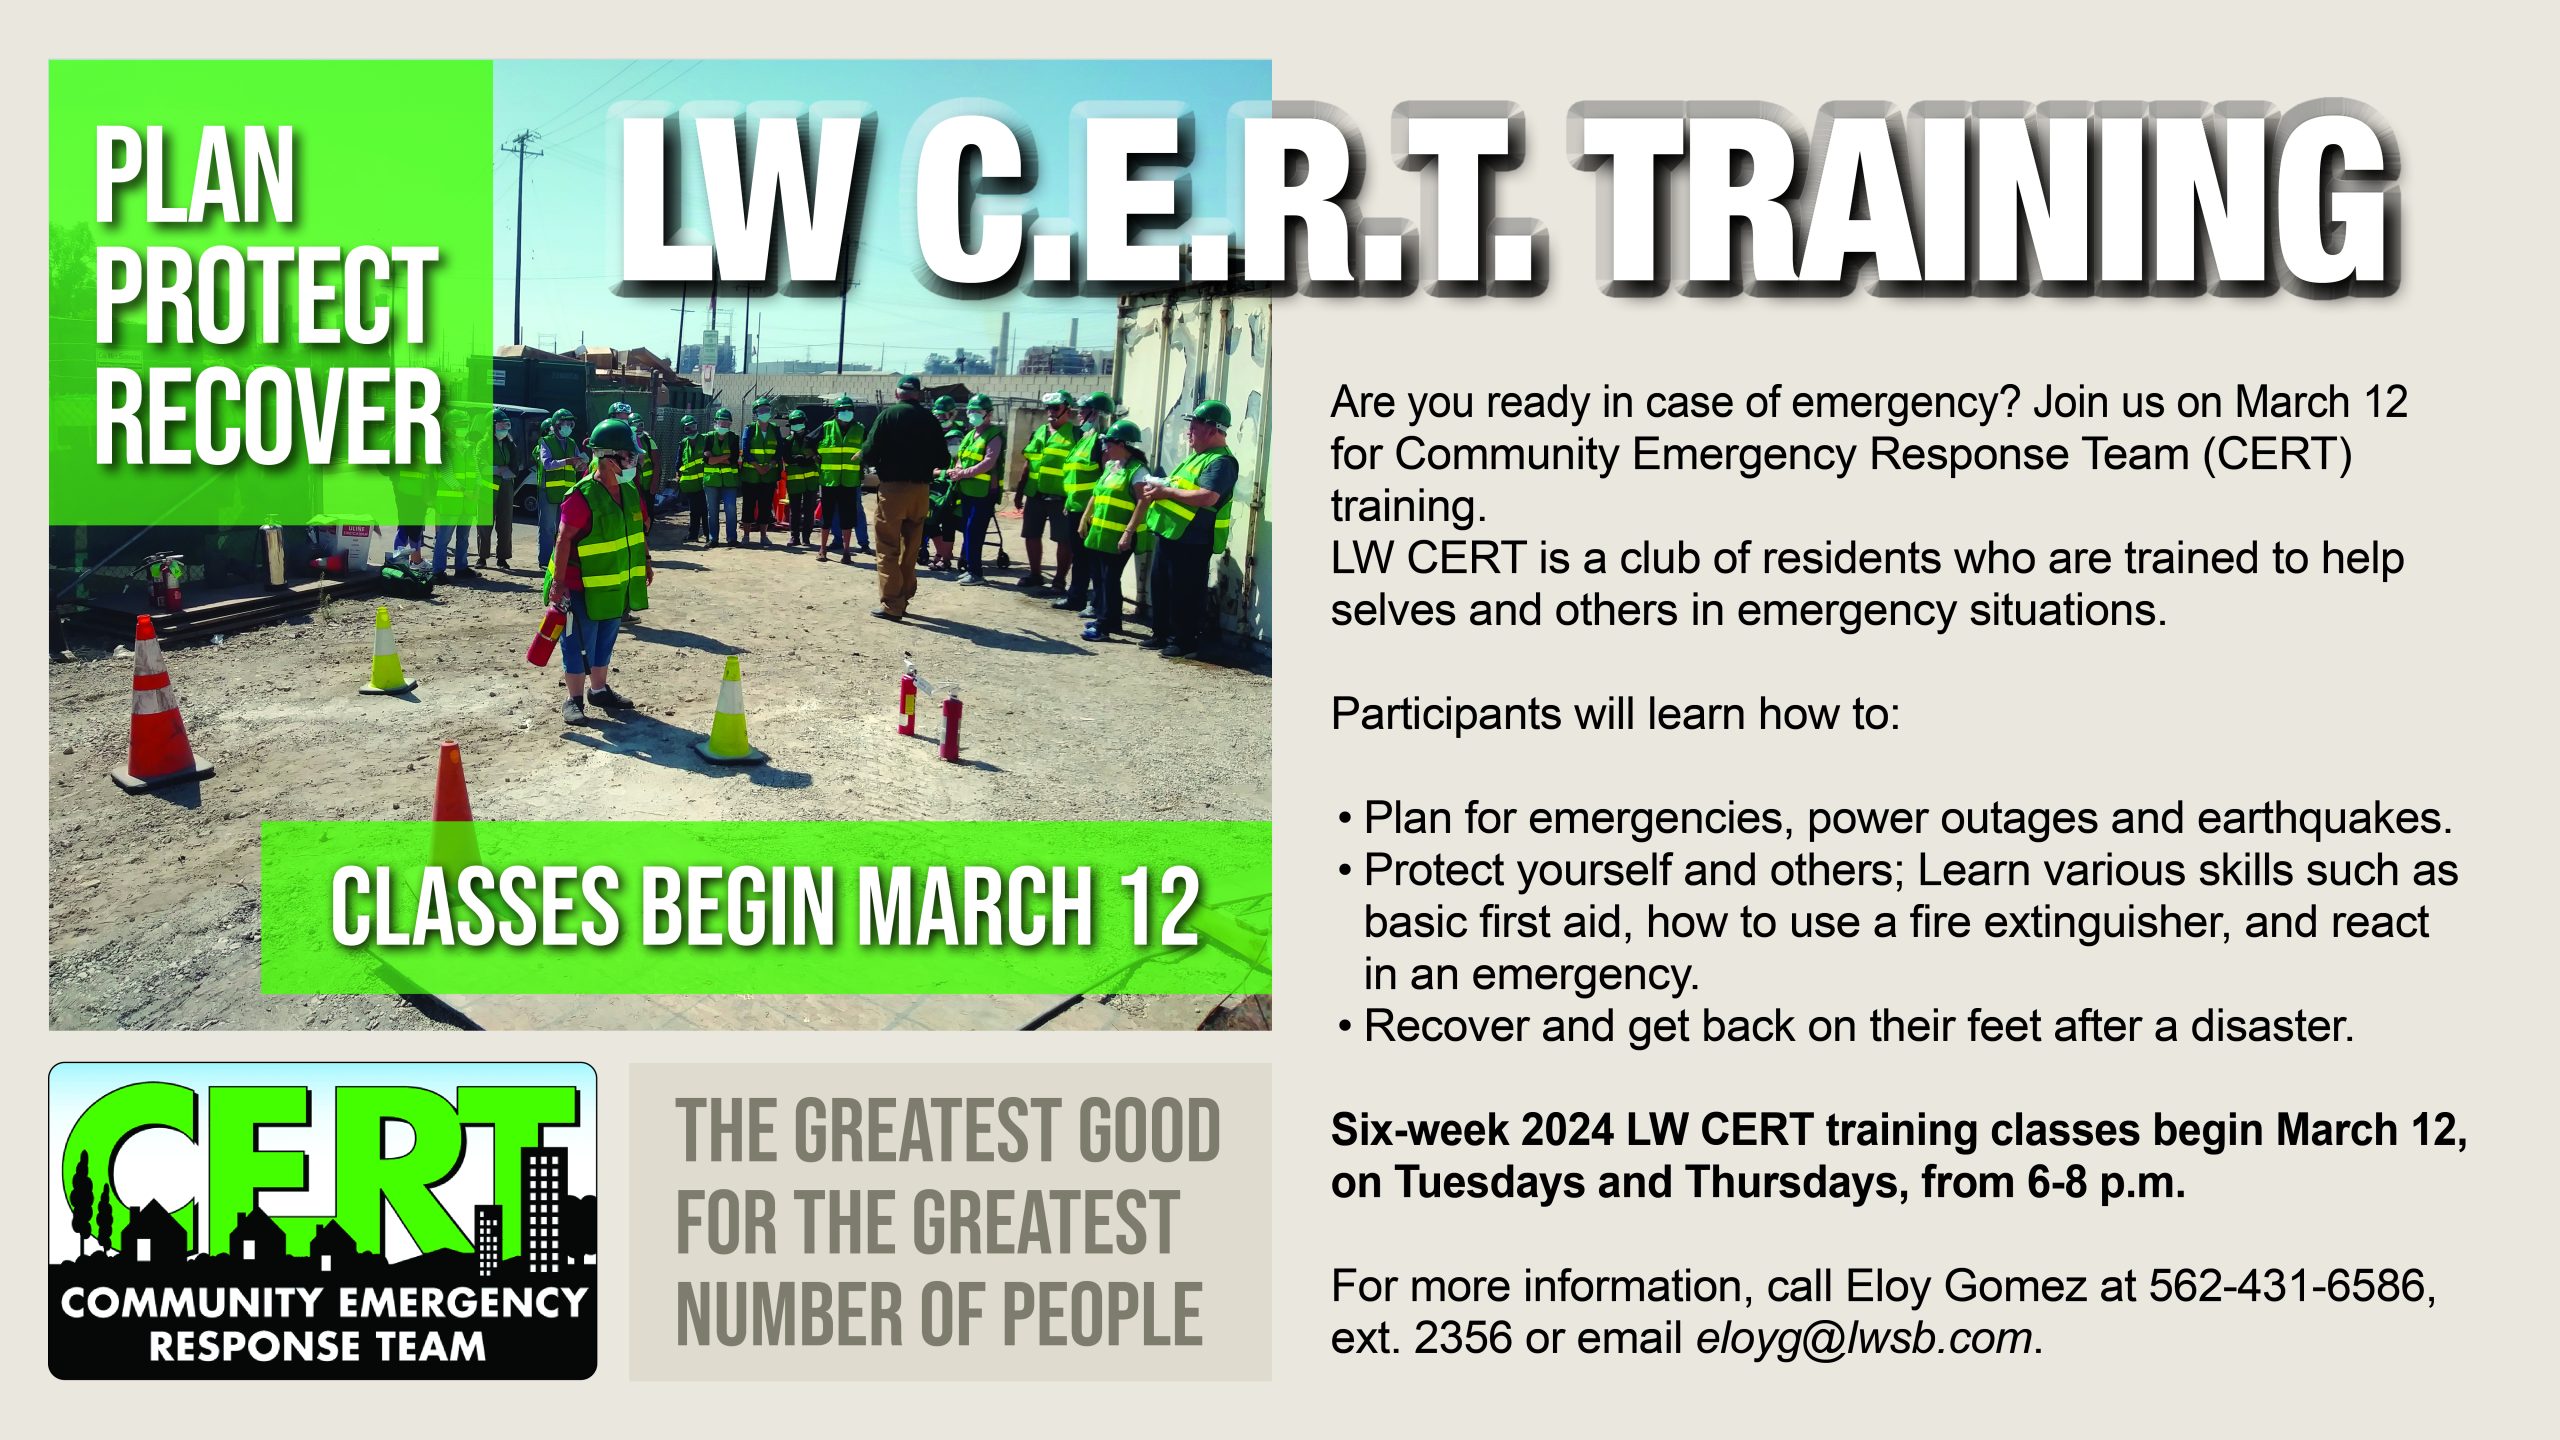 LW C.E.R.T. Training